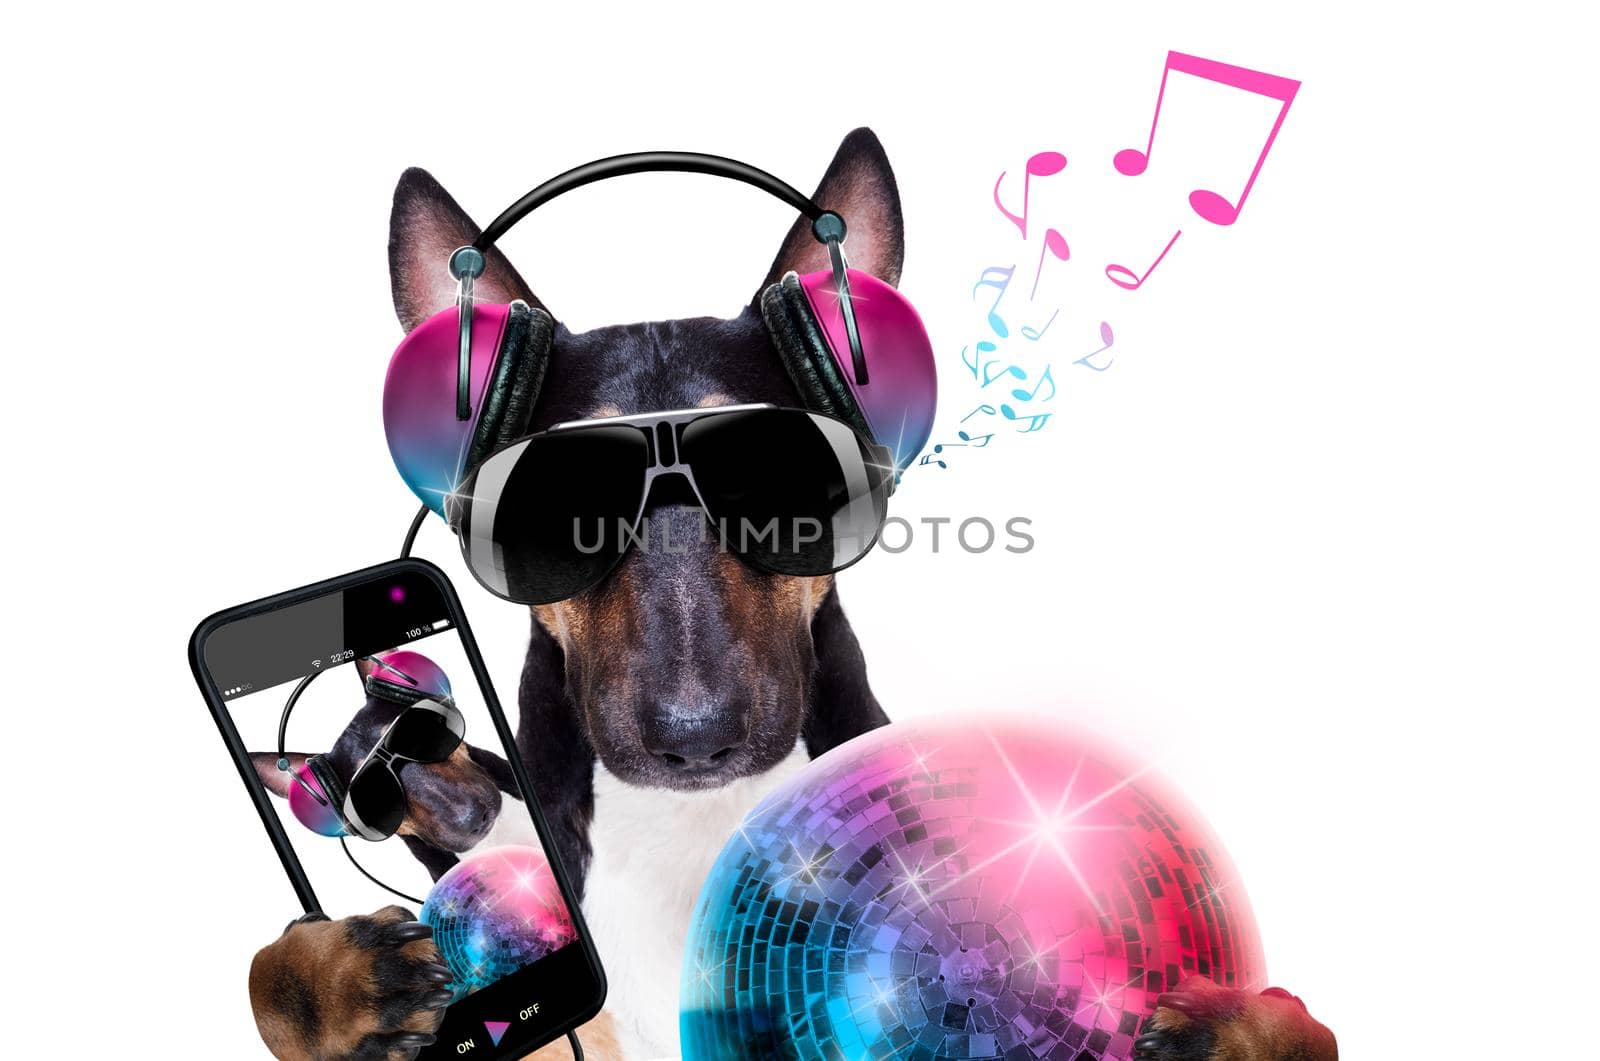 dj disco dancing music dog  by Brosch